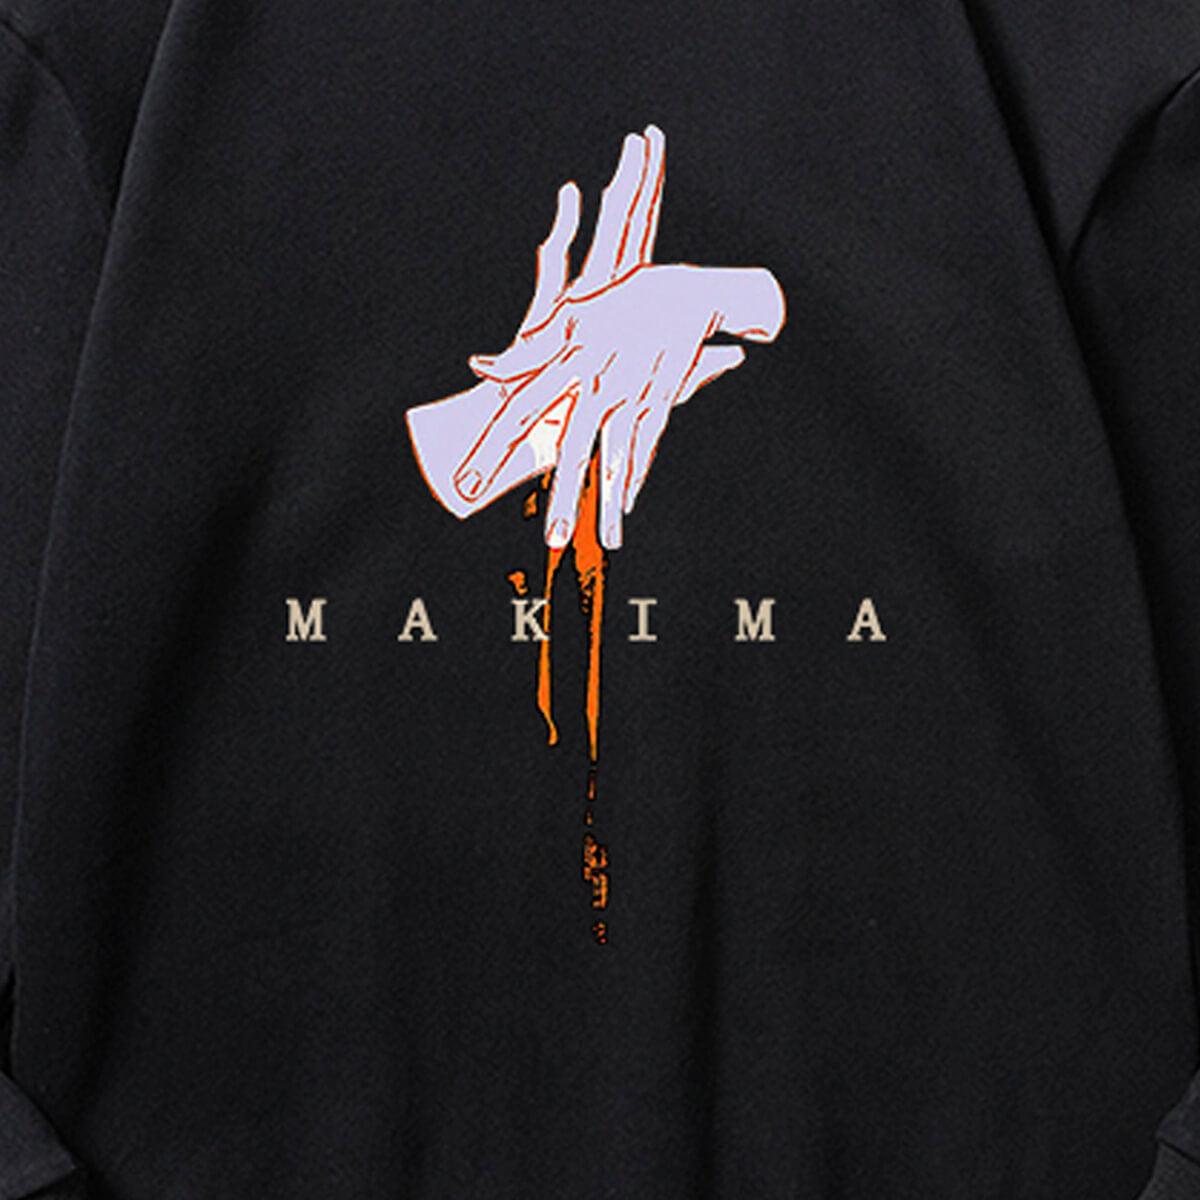 Chainsaw Man Makima Hand Sign Sweatshirt - Aesthetic Clothes Shop